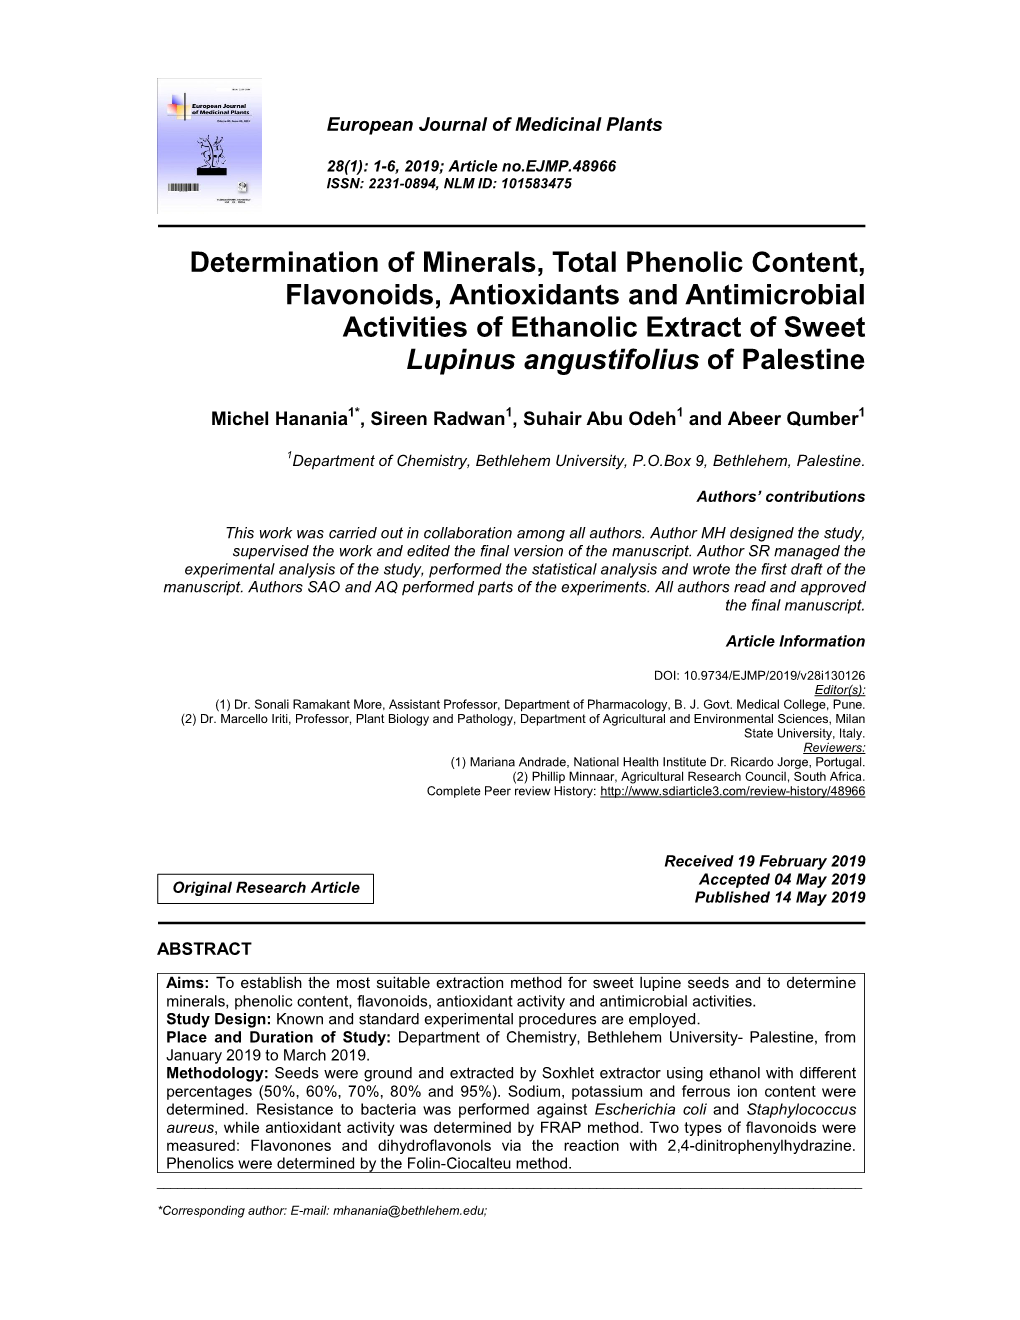 Determination of Minerals, Total Phenolic Content, Flavonoids